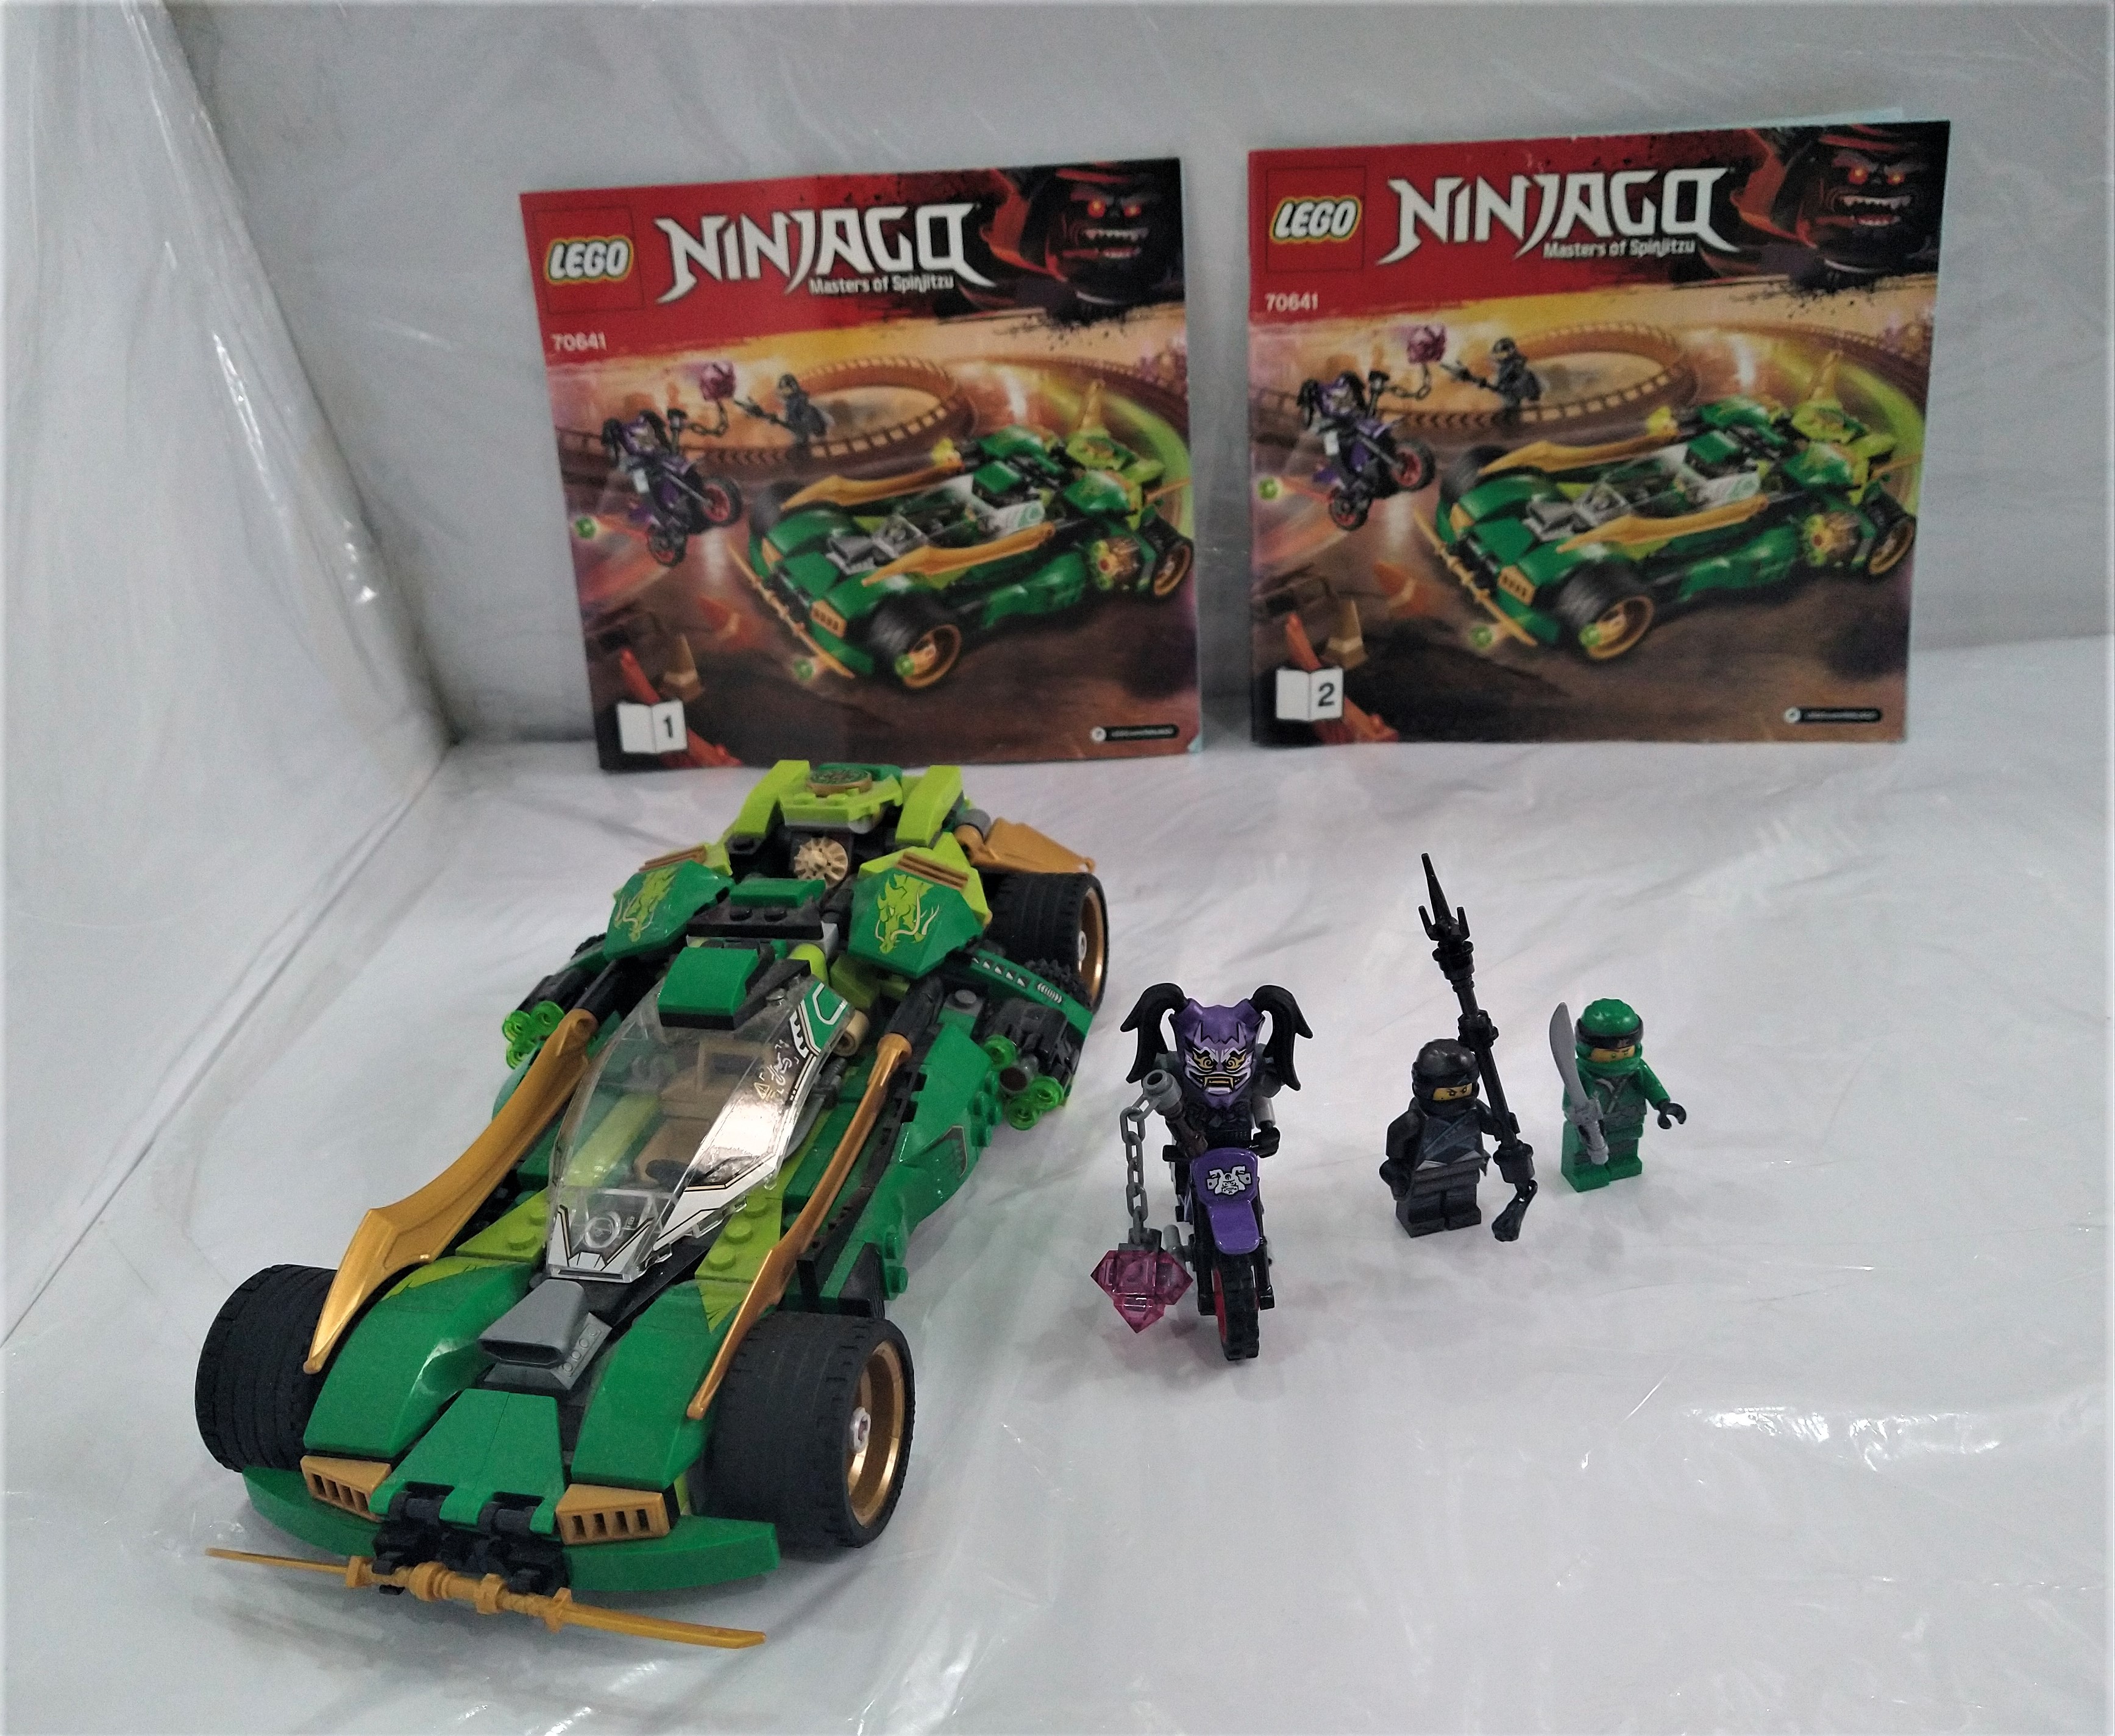 Like New and Rare! Lego 70641 Ninjago Ninja Nightcrawler 552